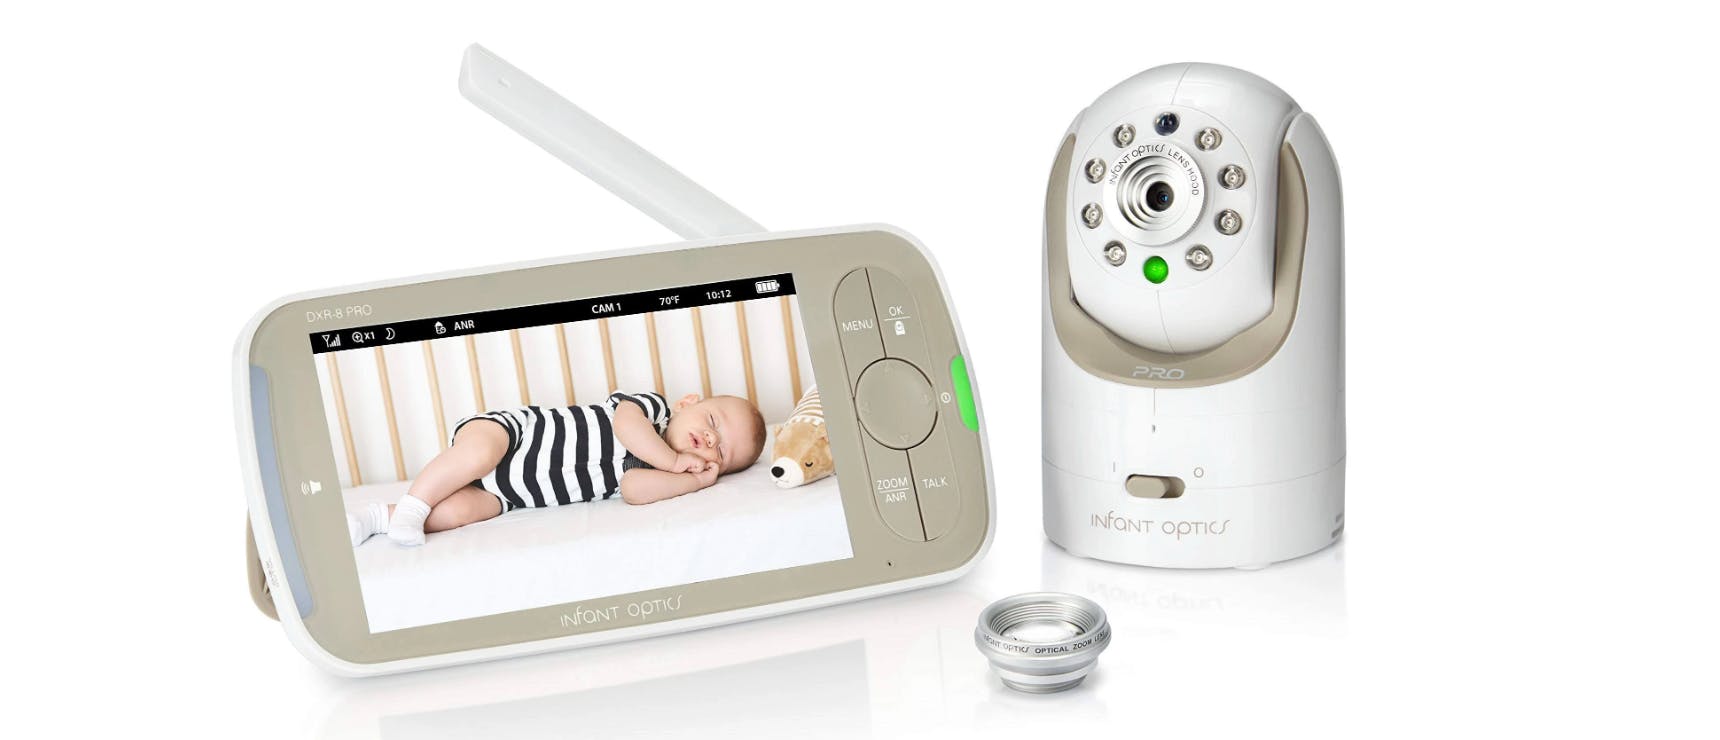 The Infant Optics DXR-8 Pro Baby Monitor.